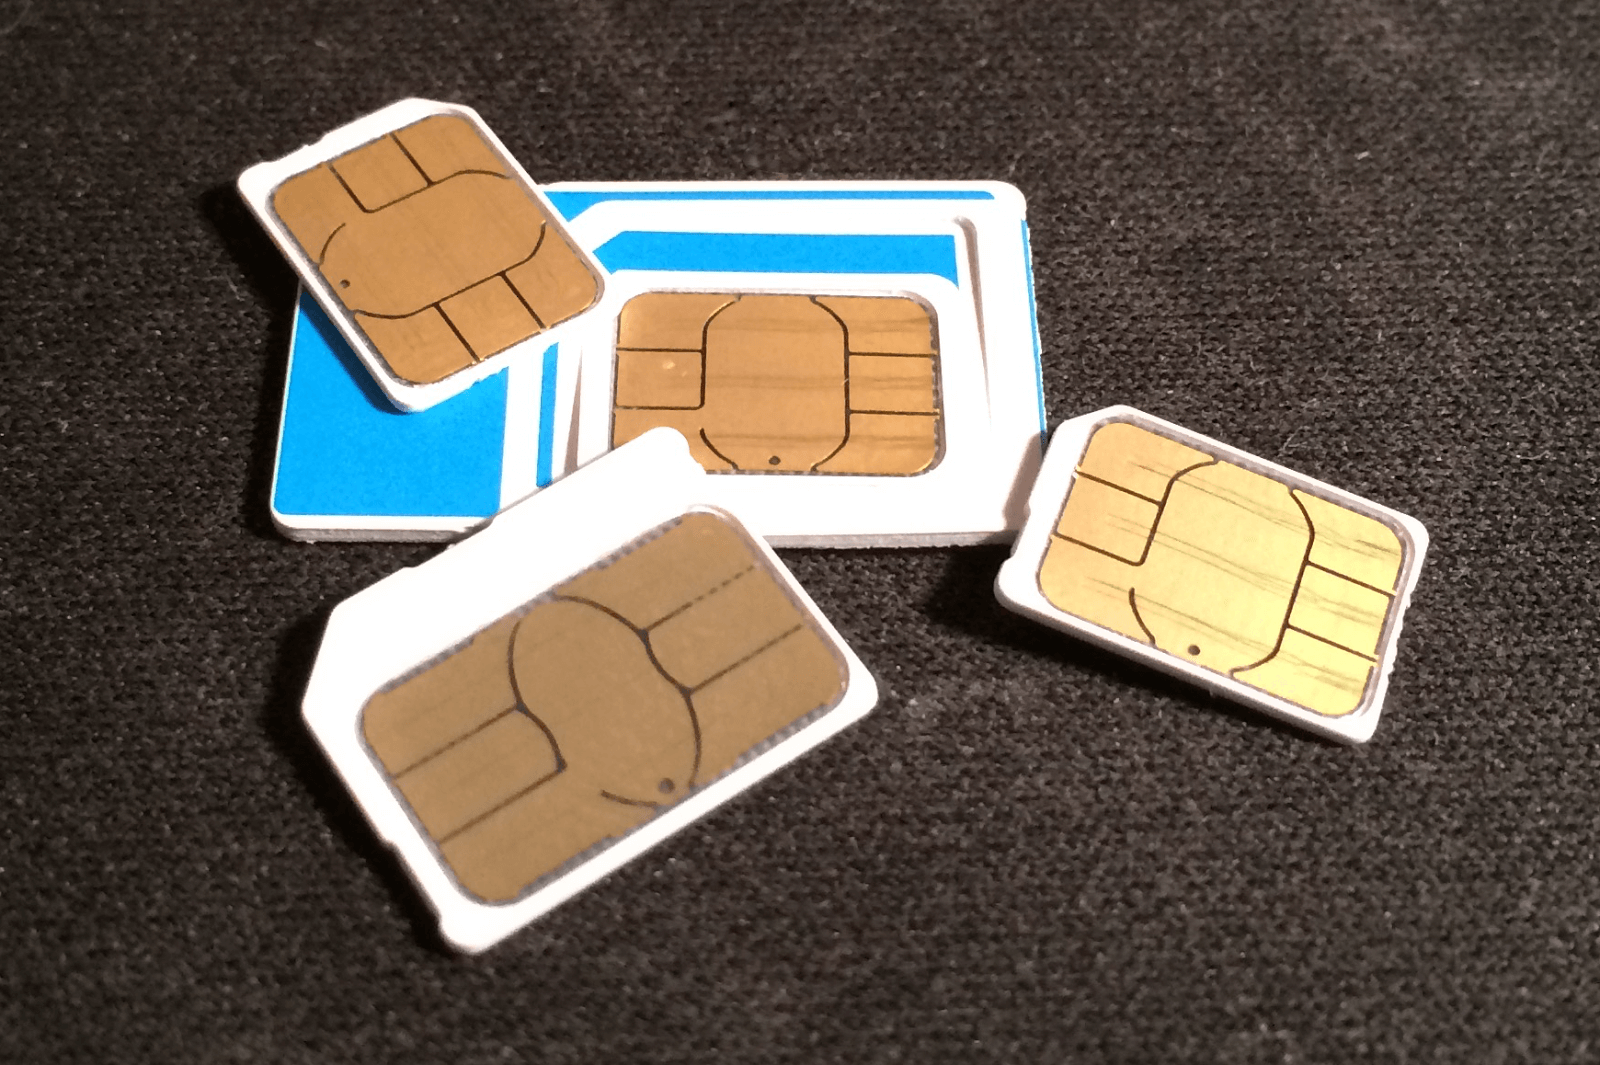 Oppositie vriendelijke groet verdund What is a SIM Card and How does it work? - Dignited